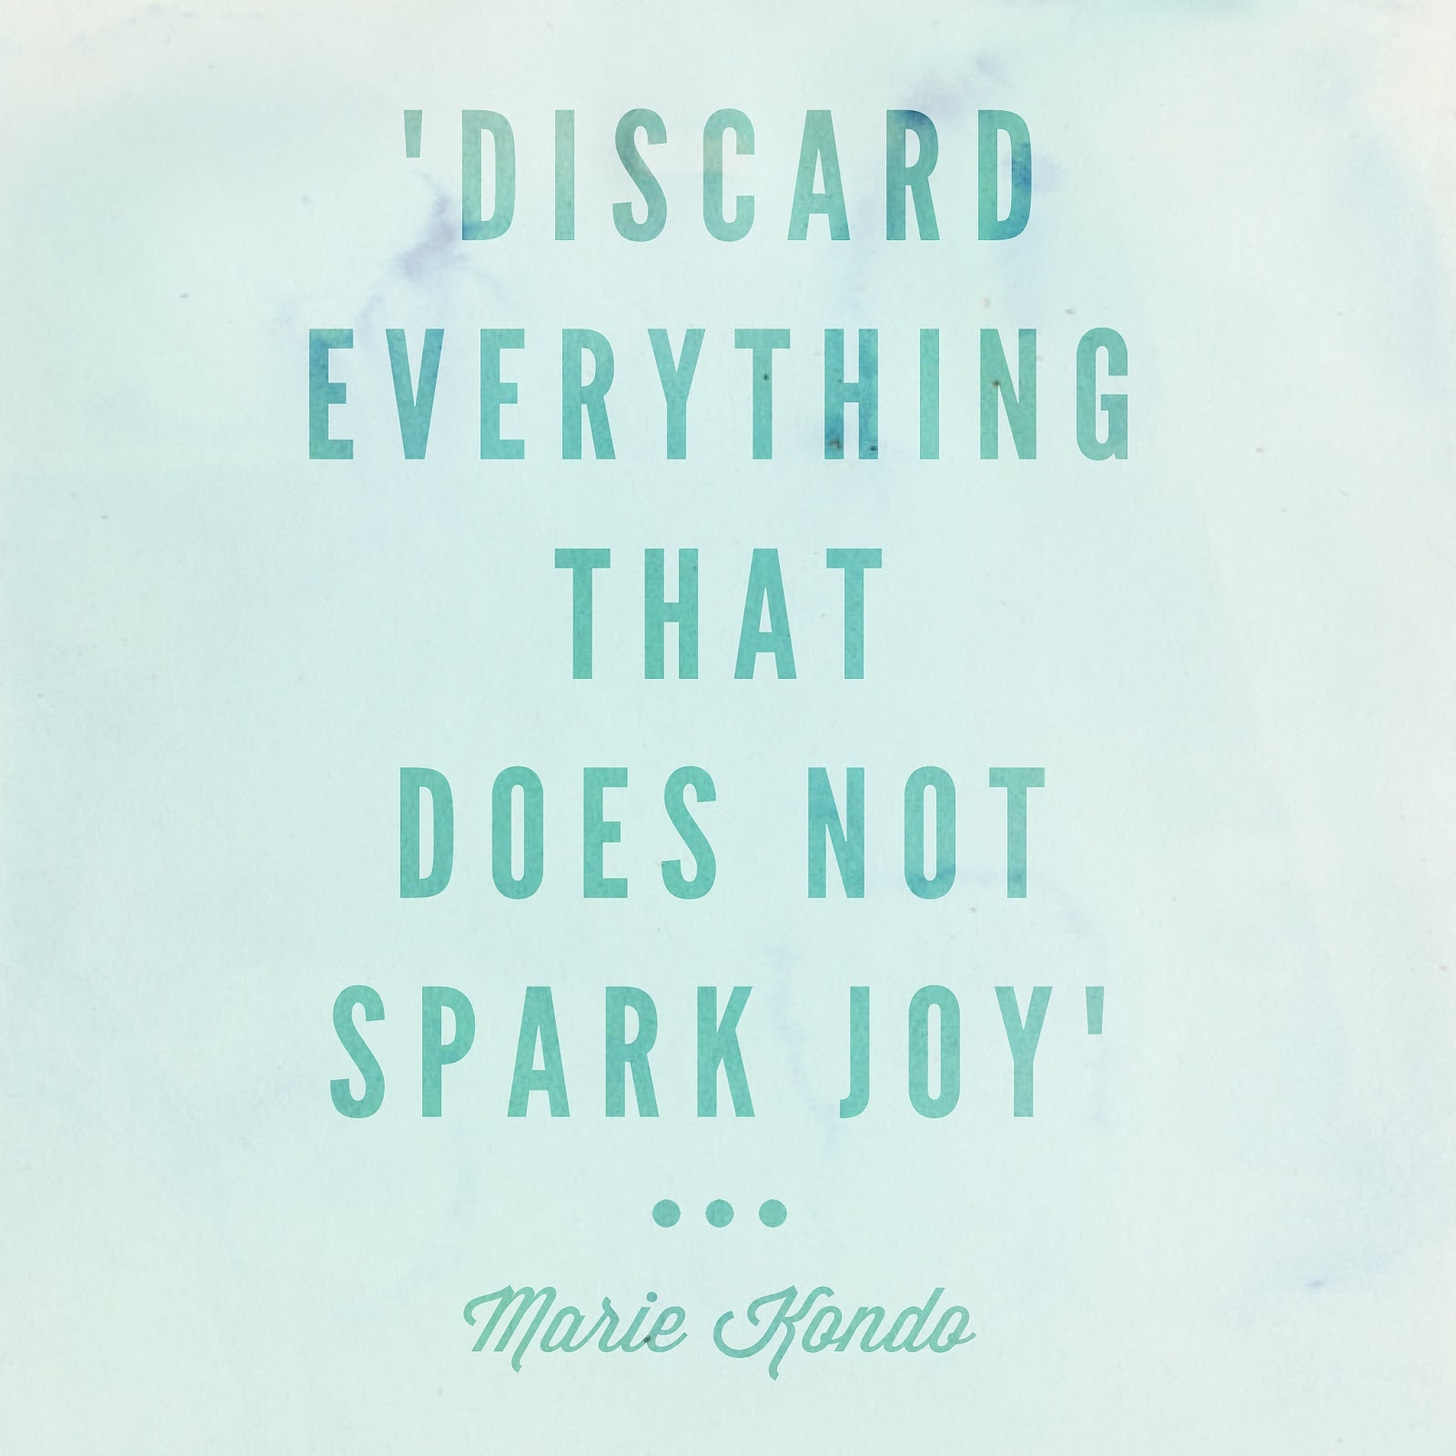 Marie Kondo Method: Spark Joy Book Tidying Wardrobe Method